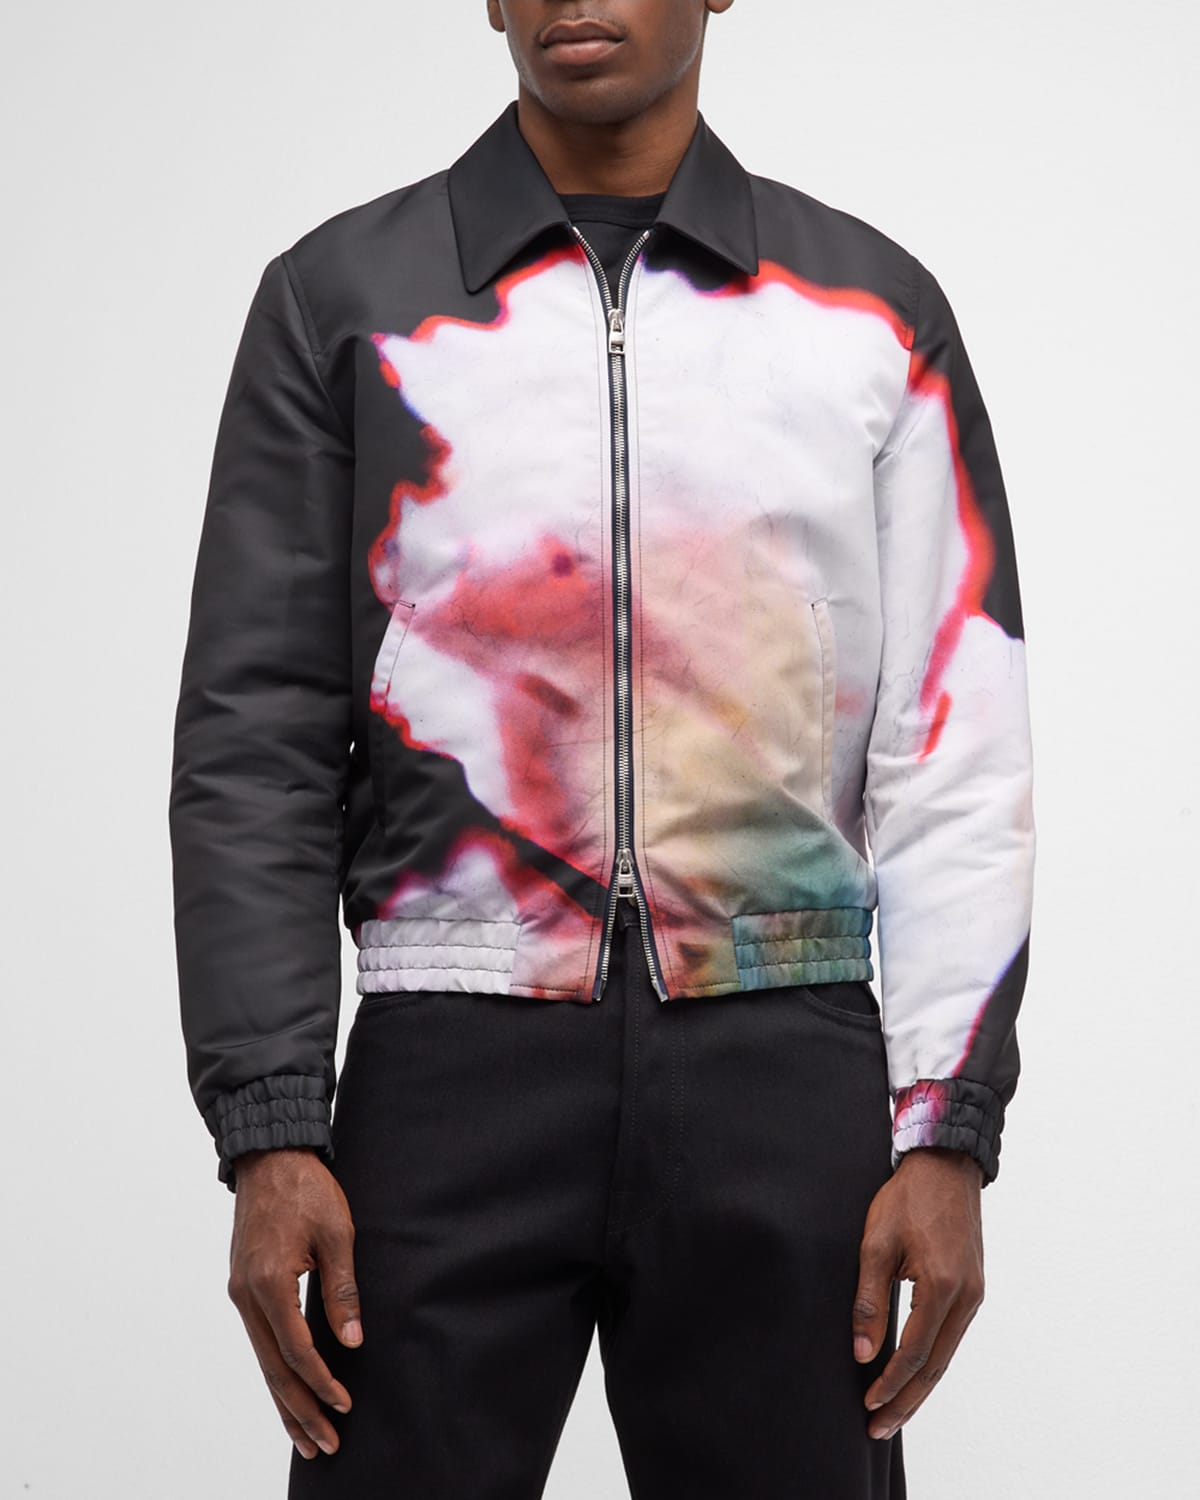 Floral Jacket | Neiman Marcus